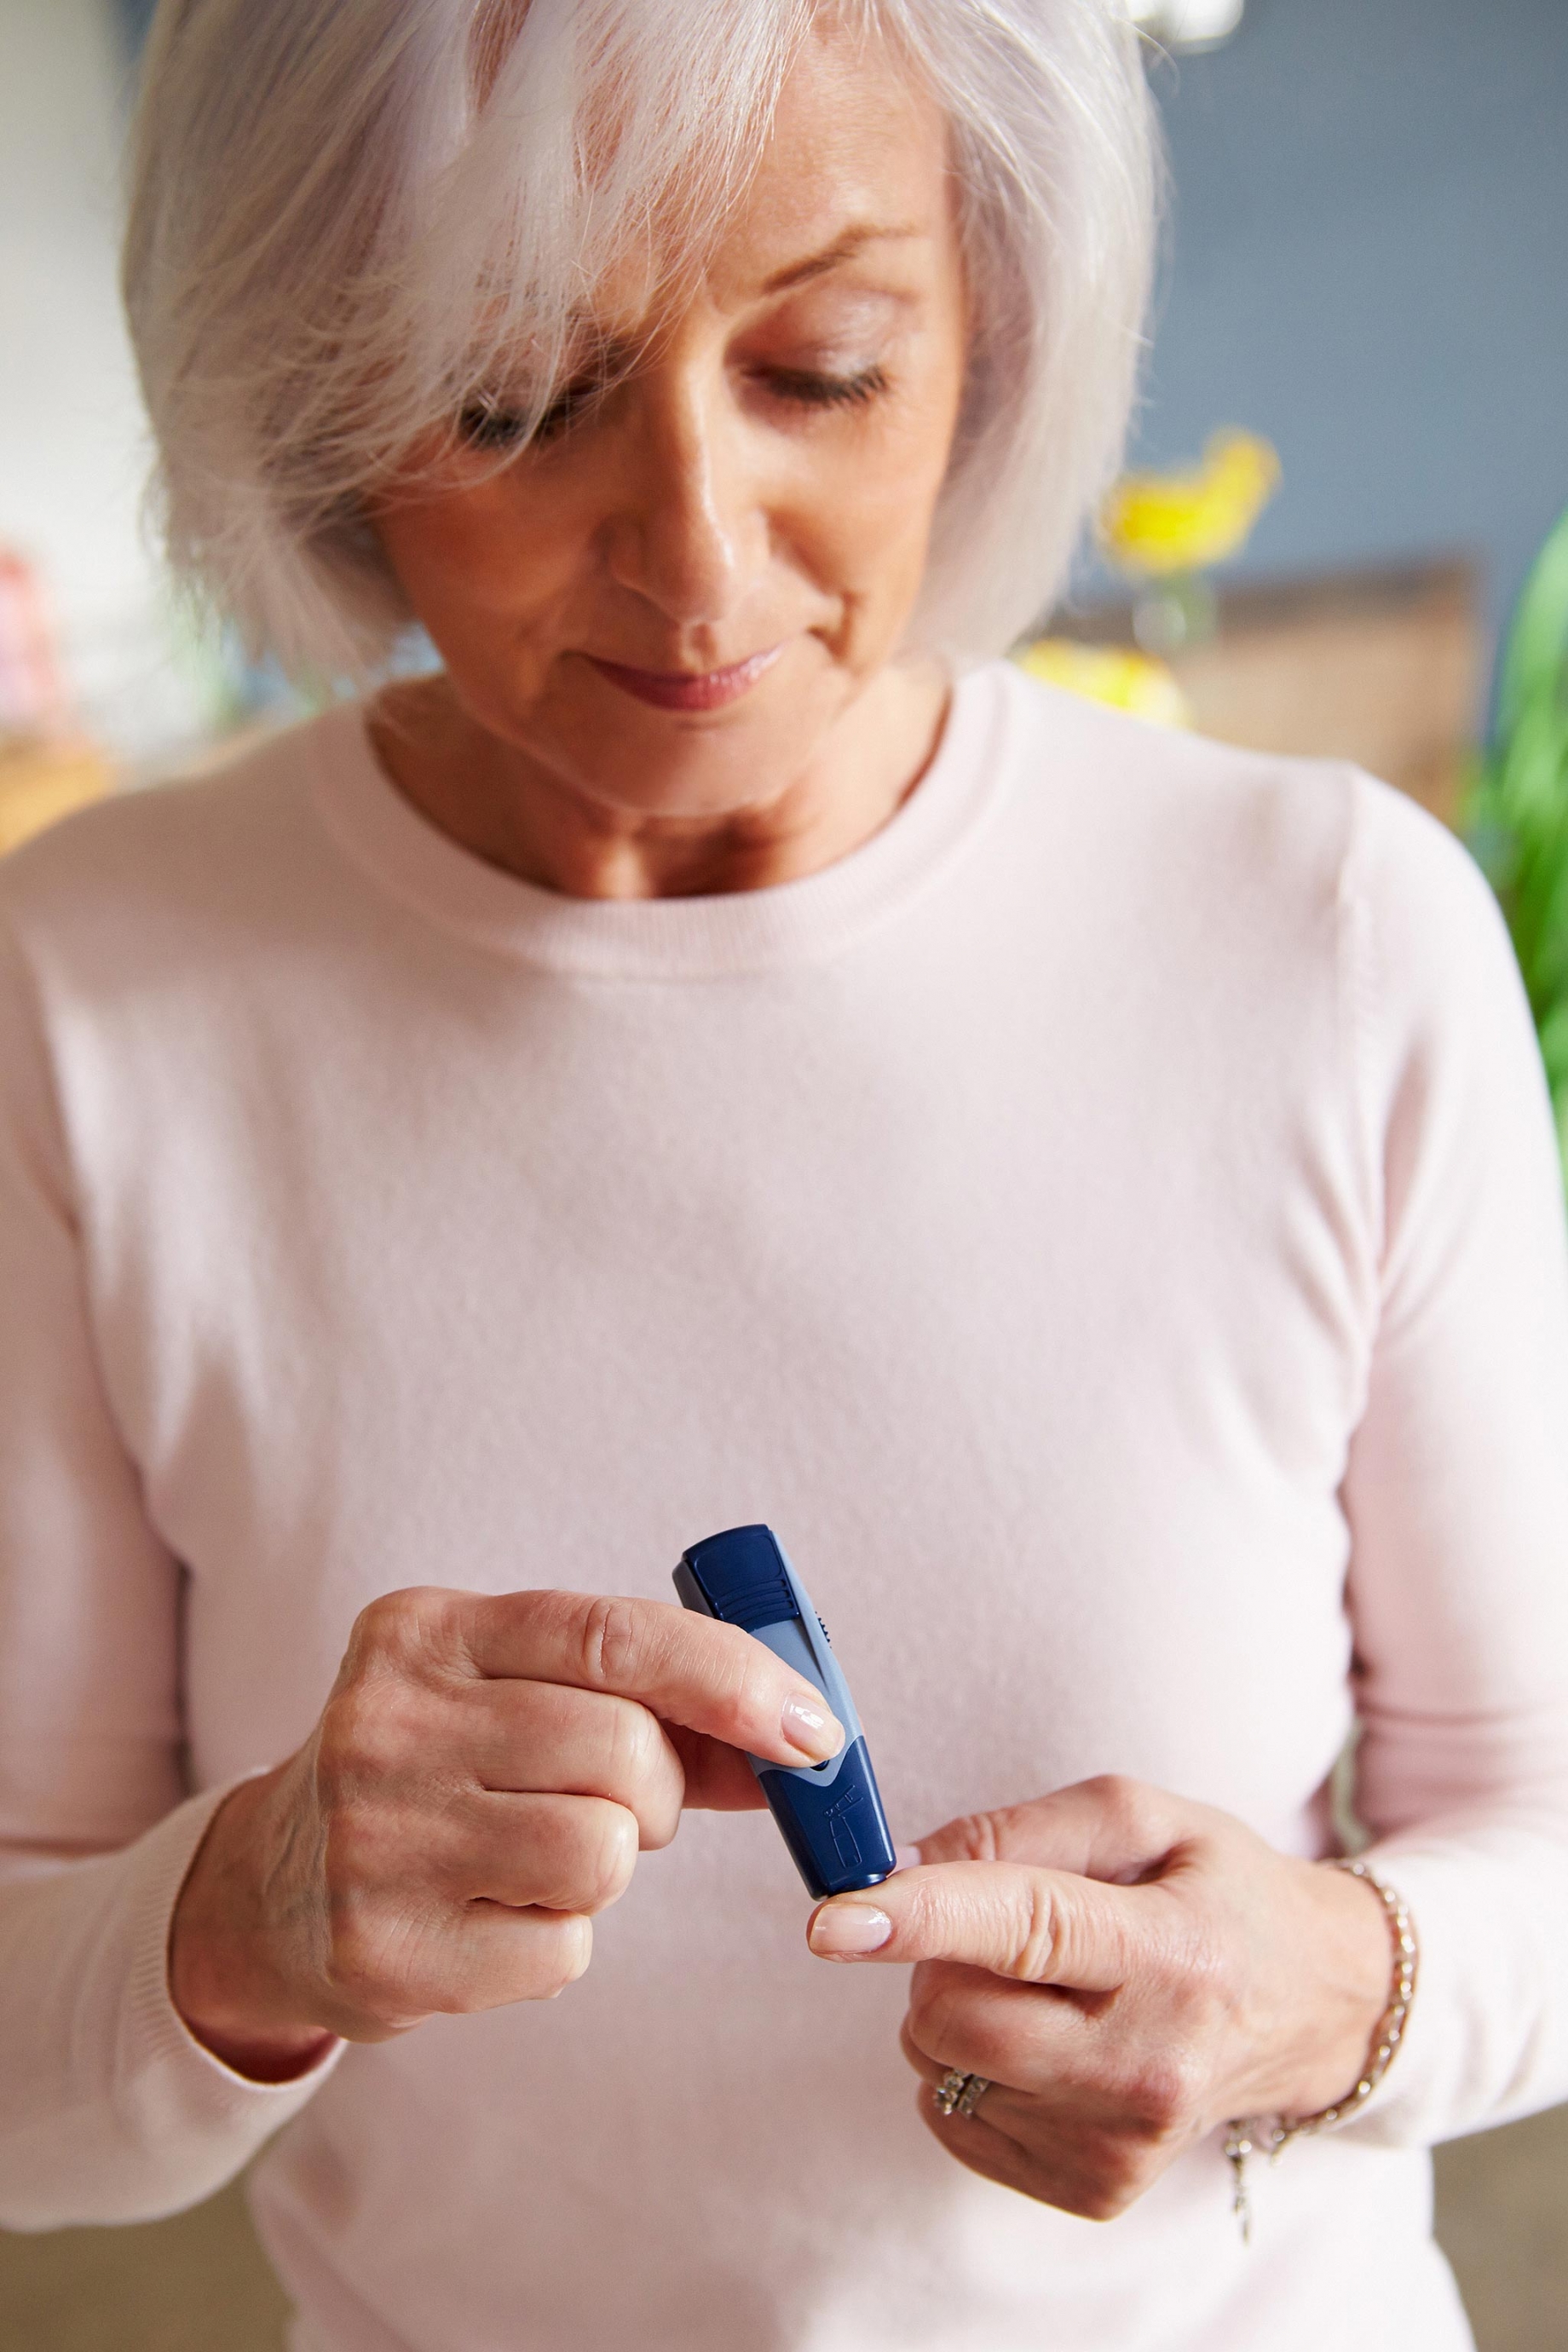 Woman checking blood sugar levels